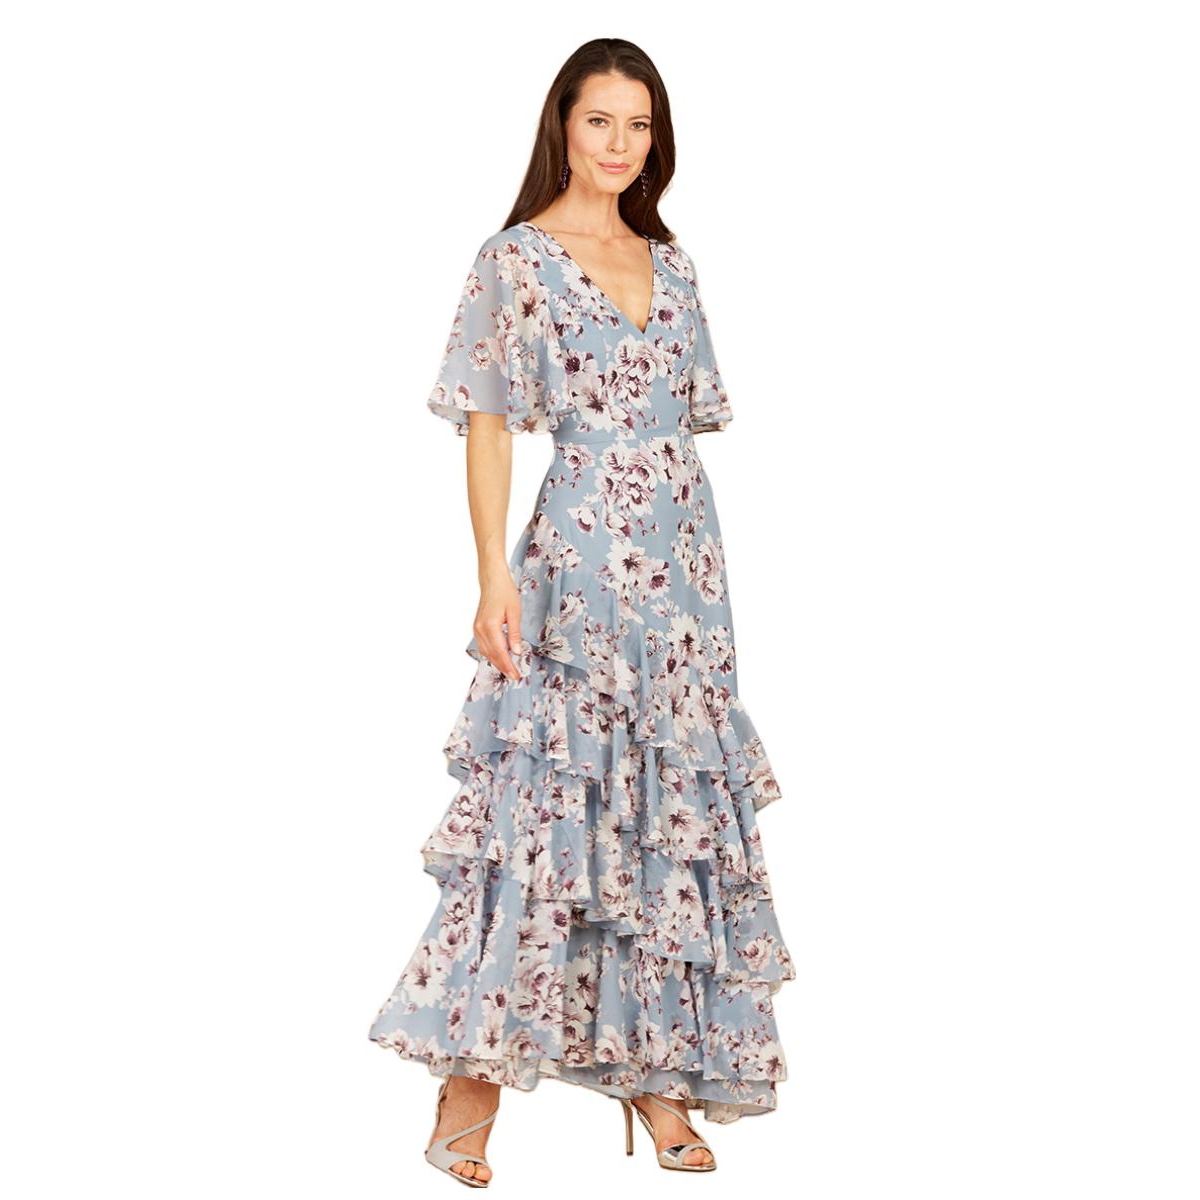 Women's Cape Sleeve Print Dress - Slate